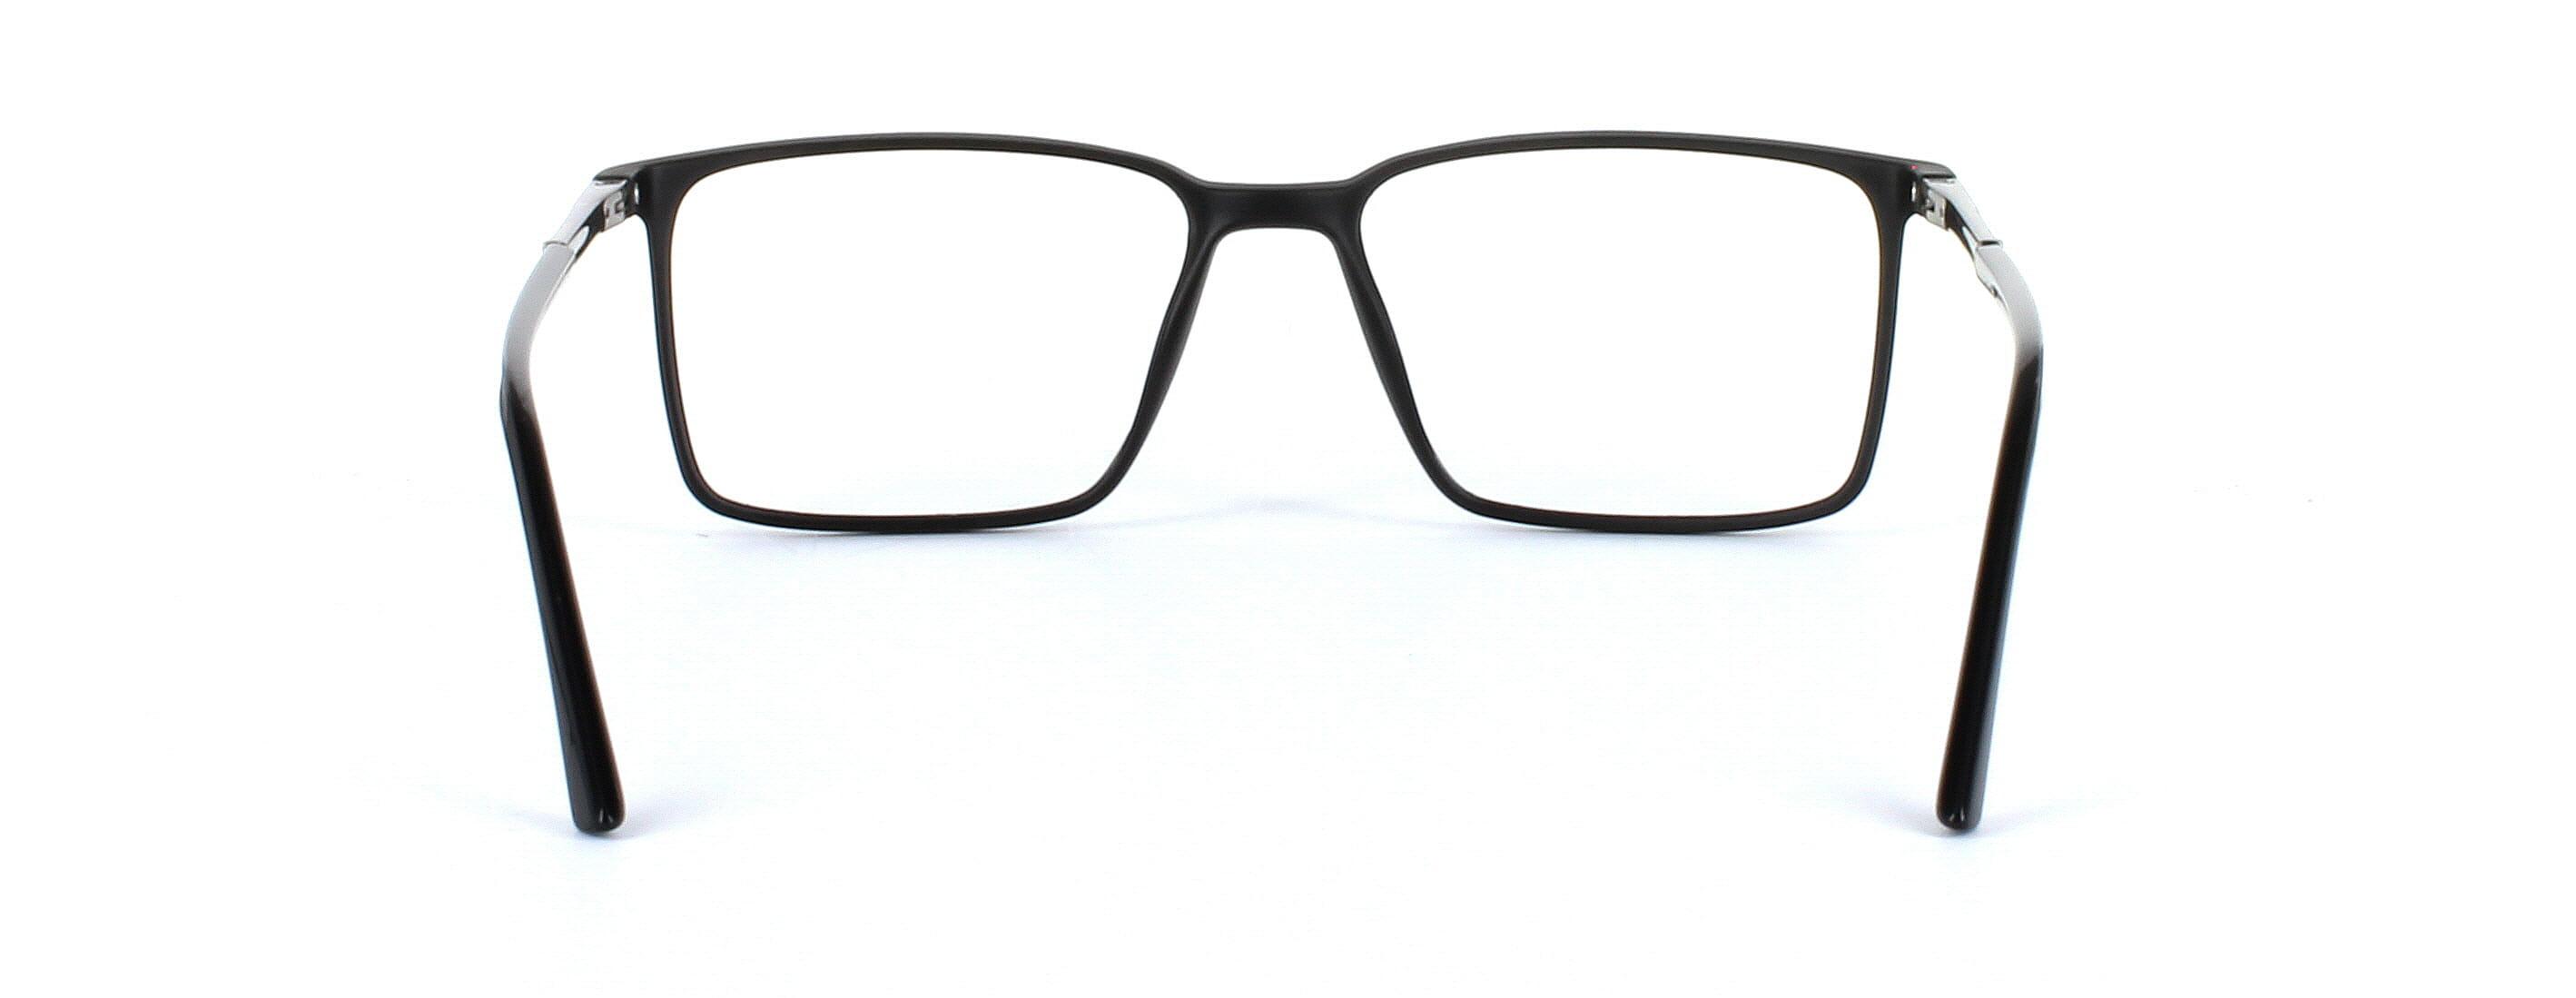 Preveza - Black - Unisex glasses image view 3